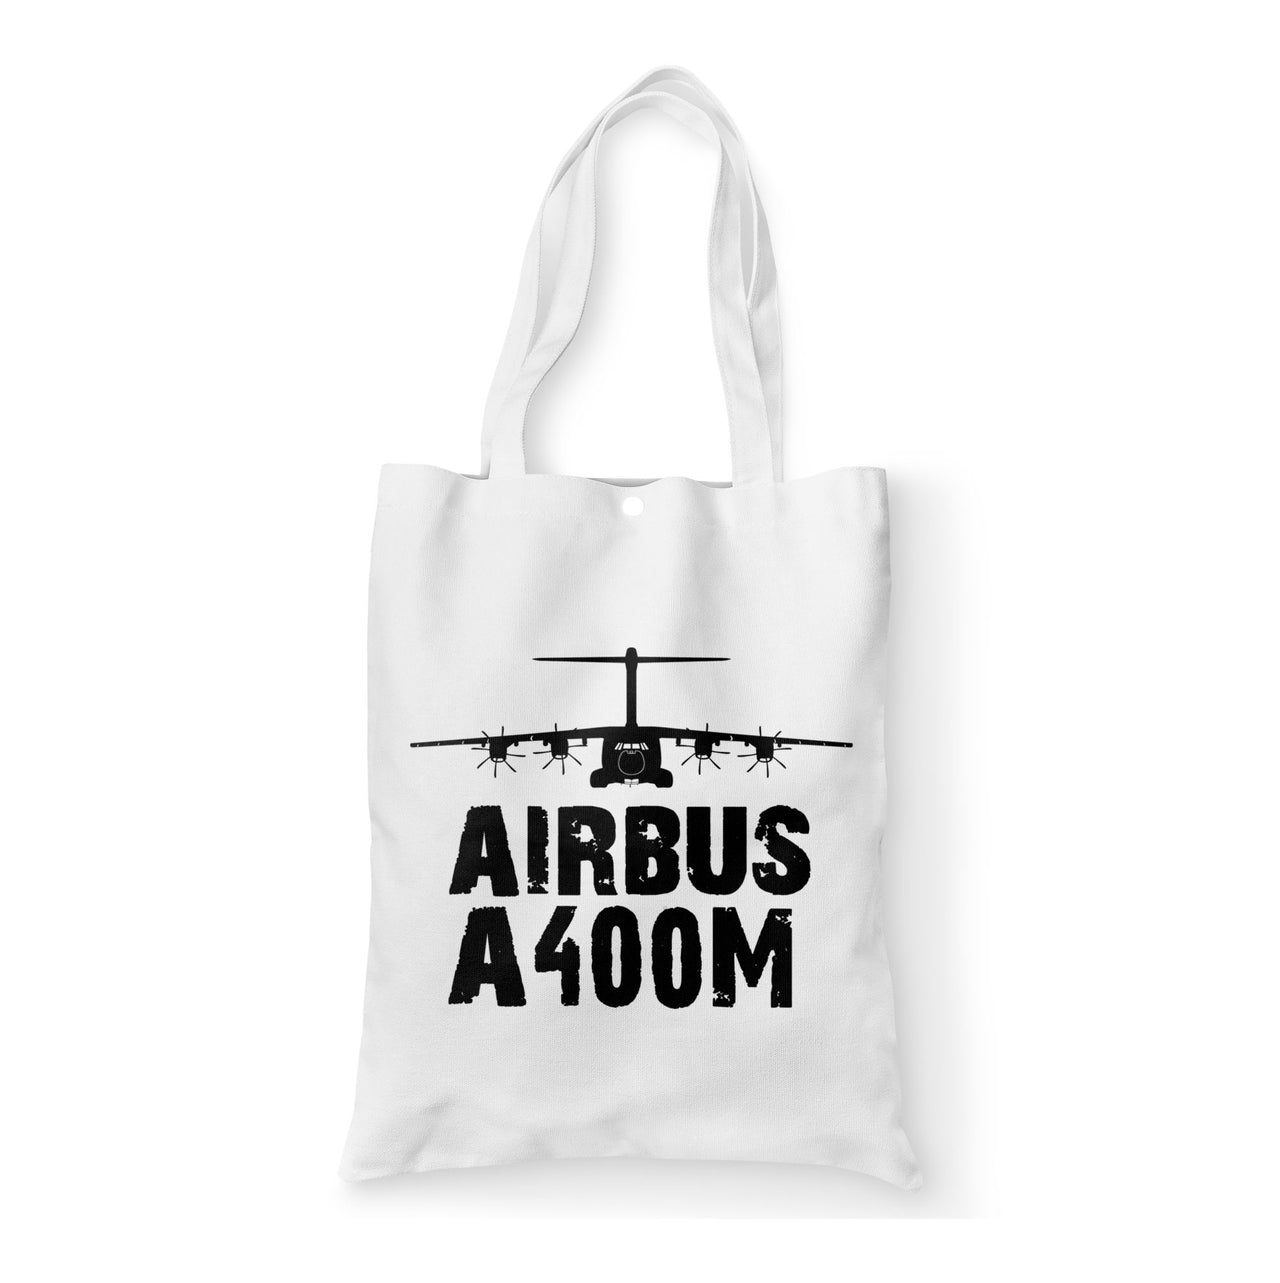 Airbus A400M & Plane Designed Tote Bags